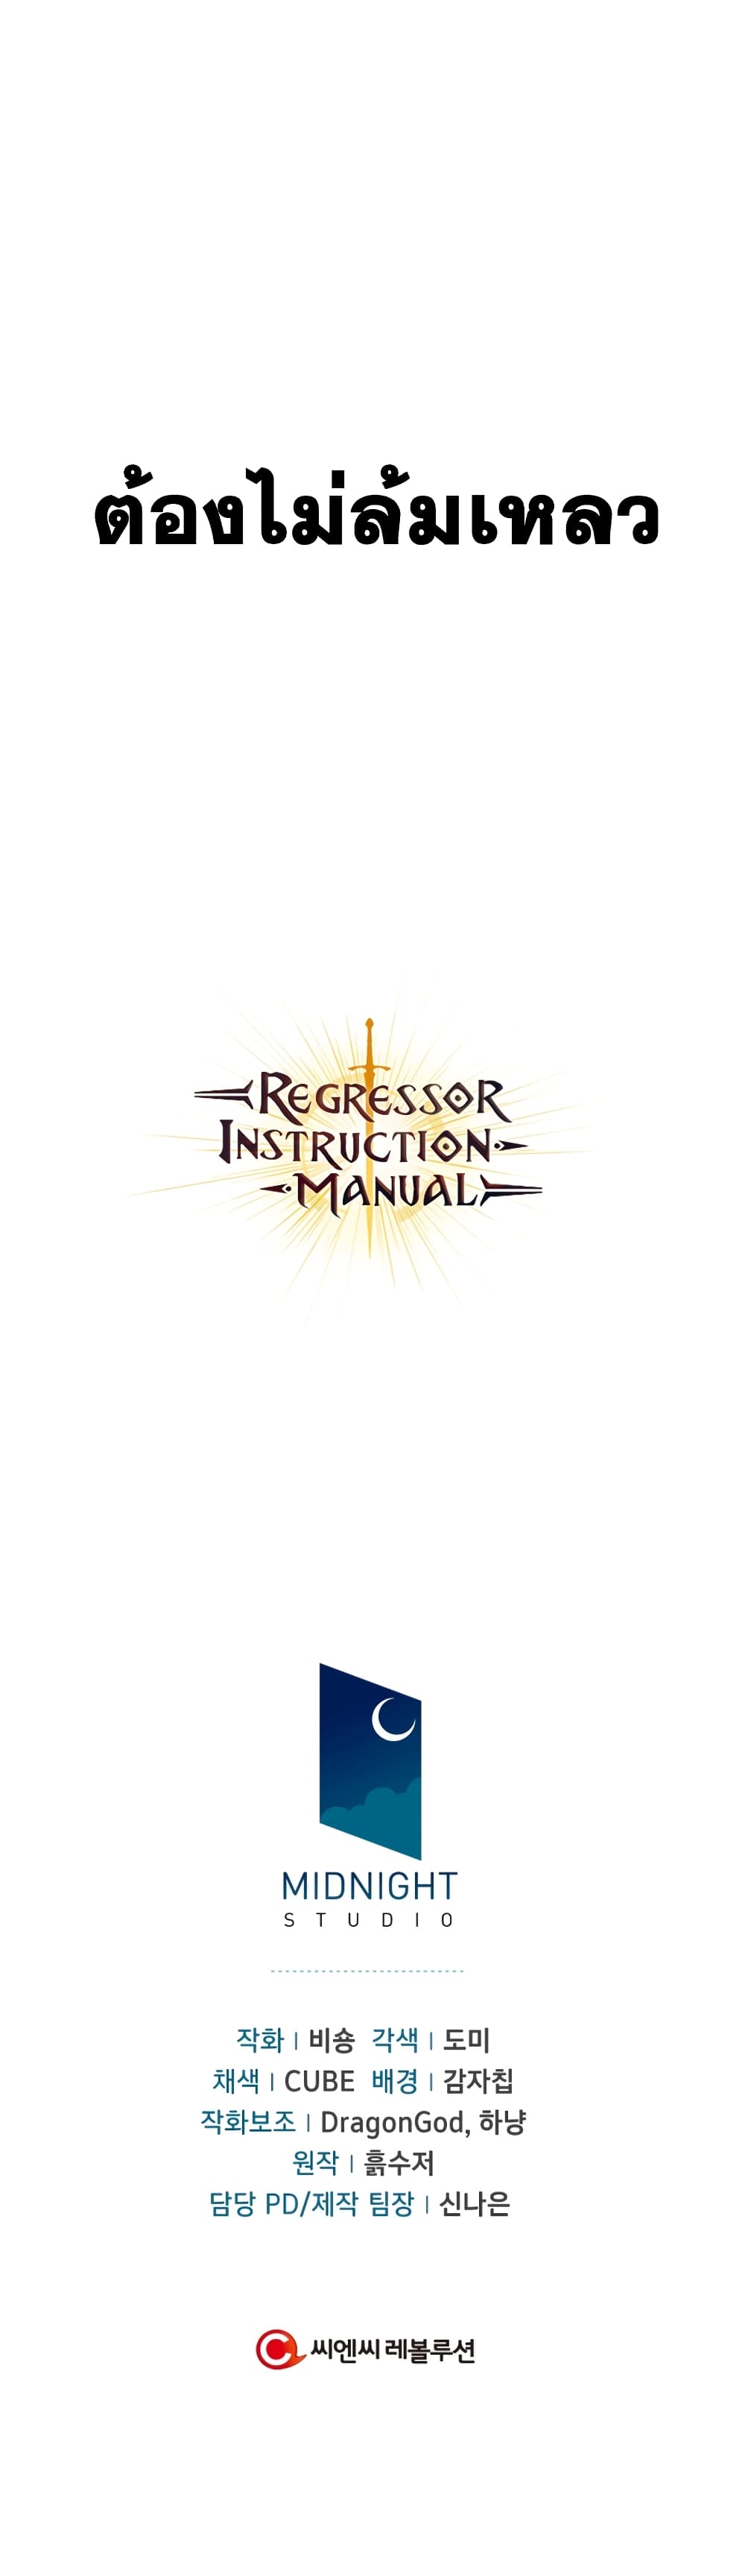 Regressor Instruction Manual 29 24